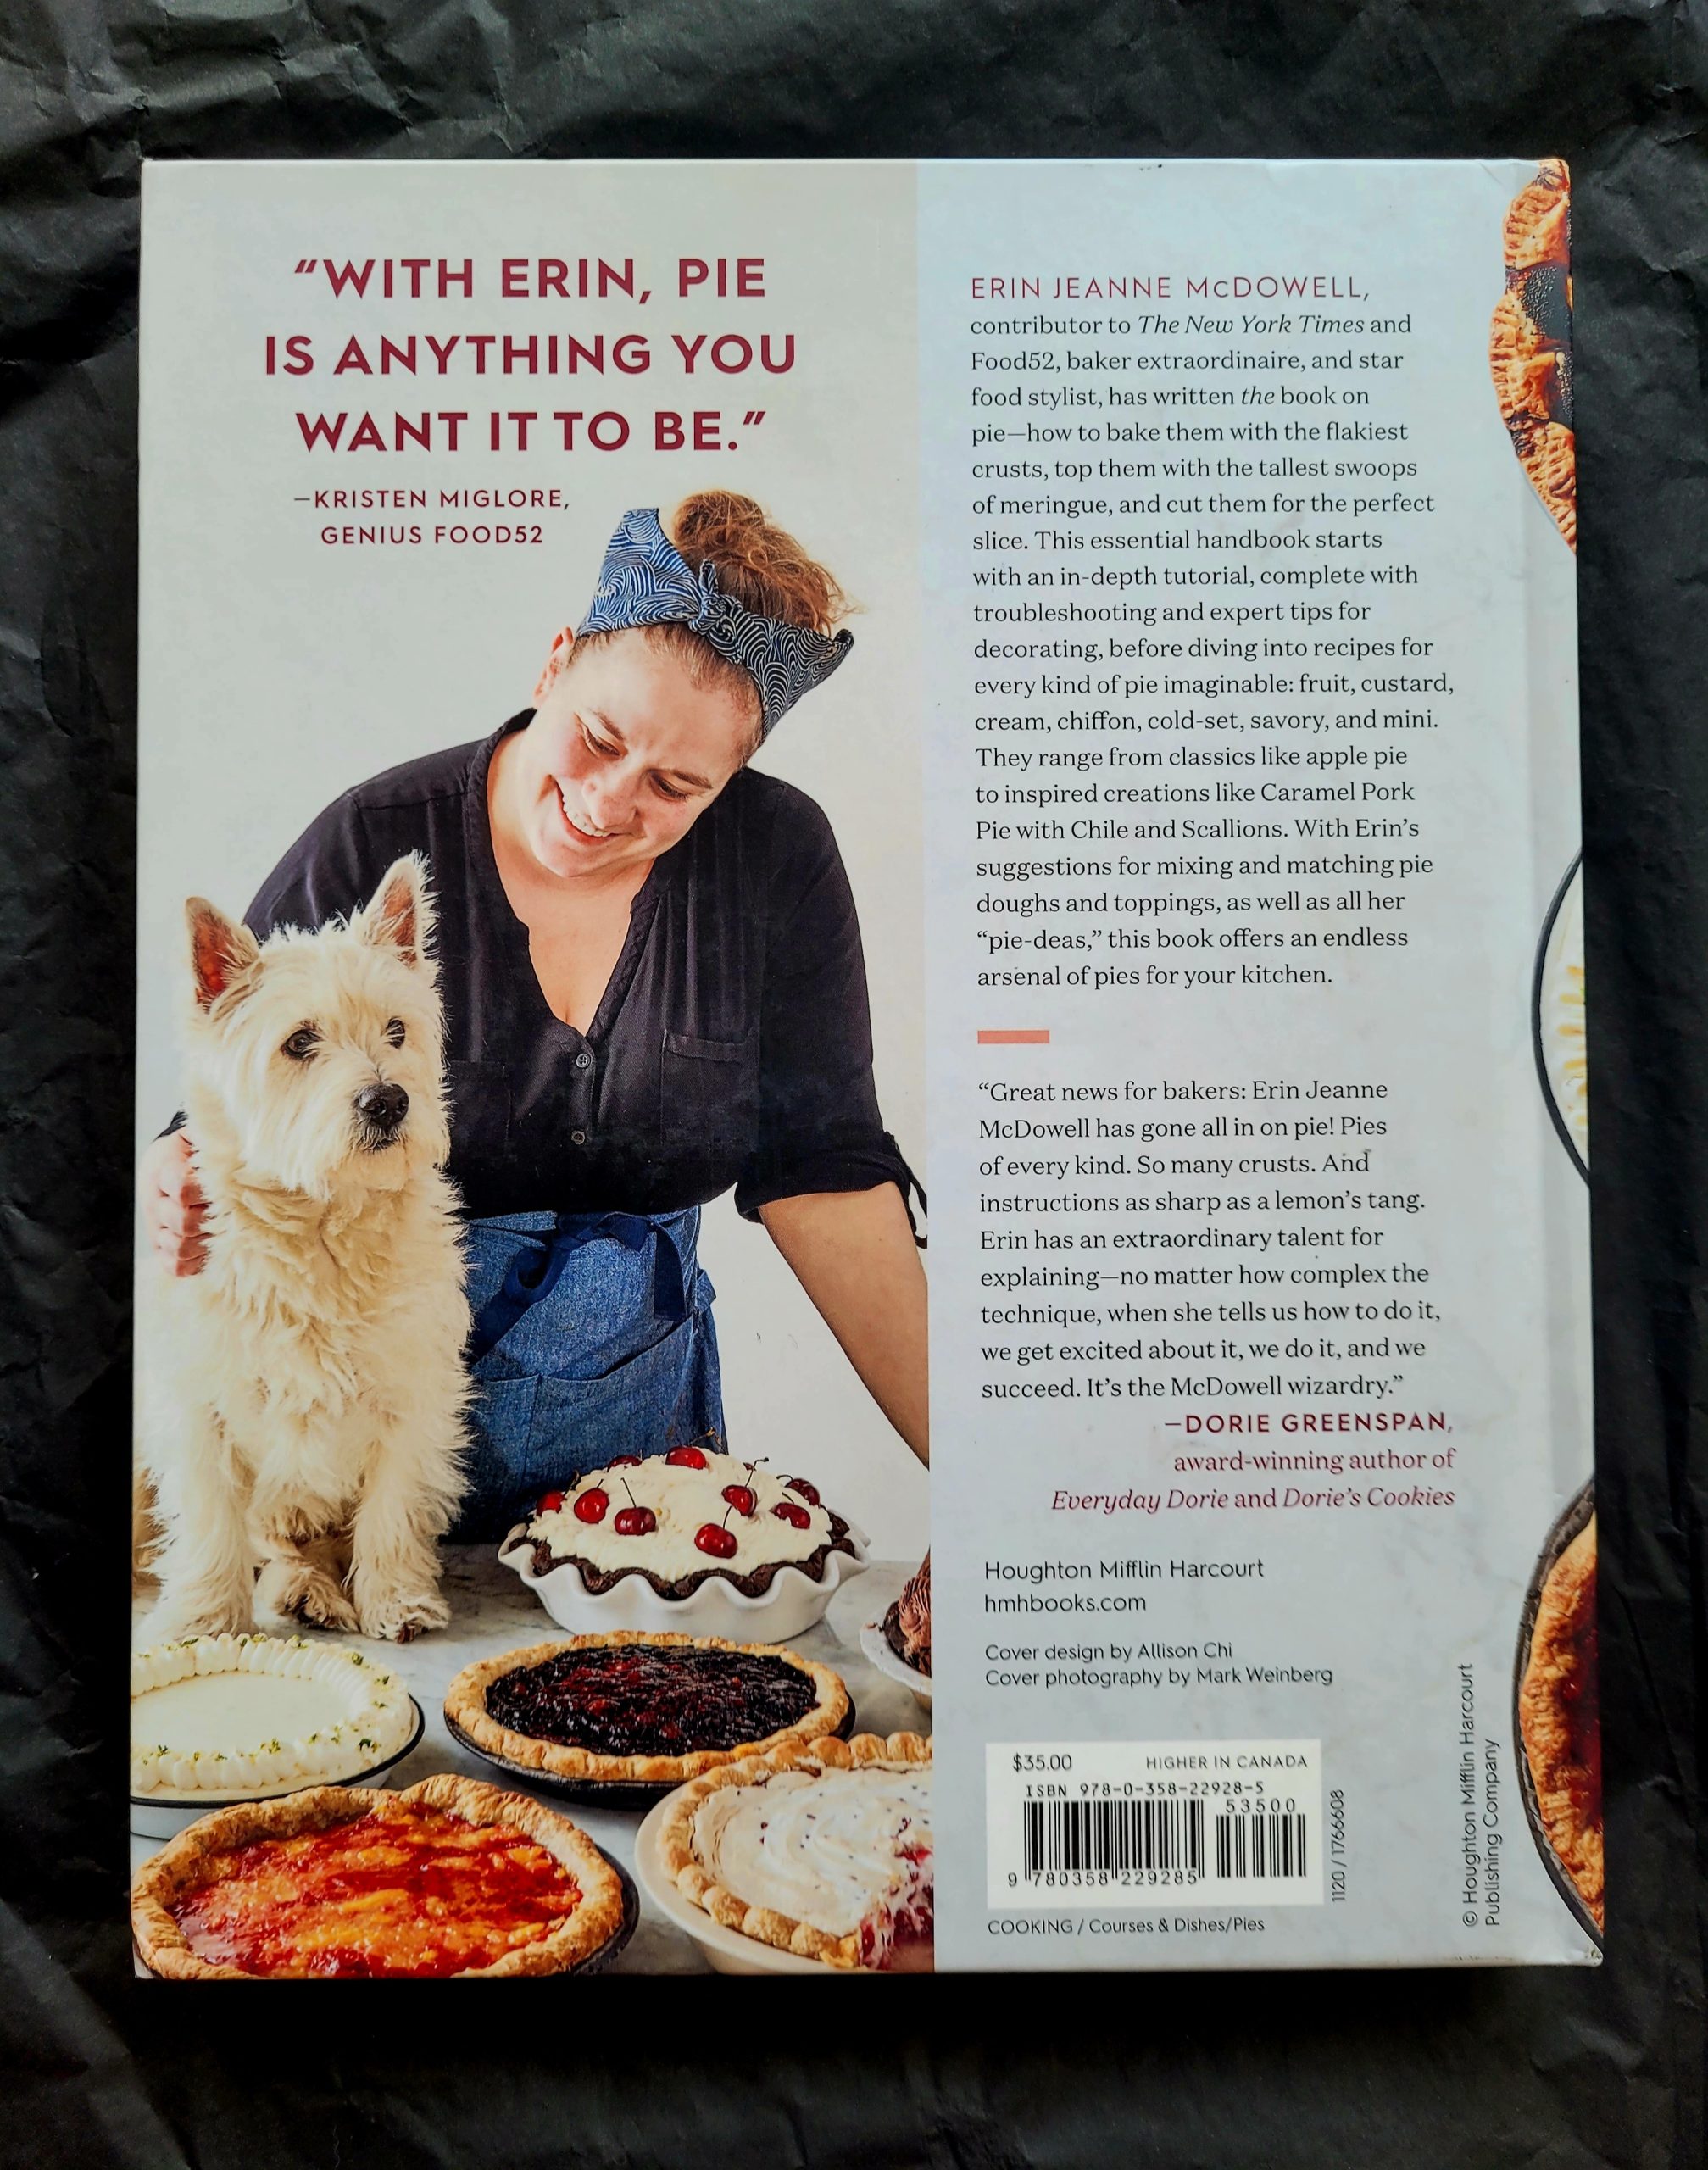 The Book on Pie - Erin Jeanne McDowell